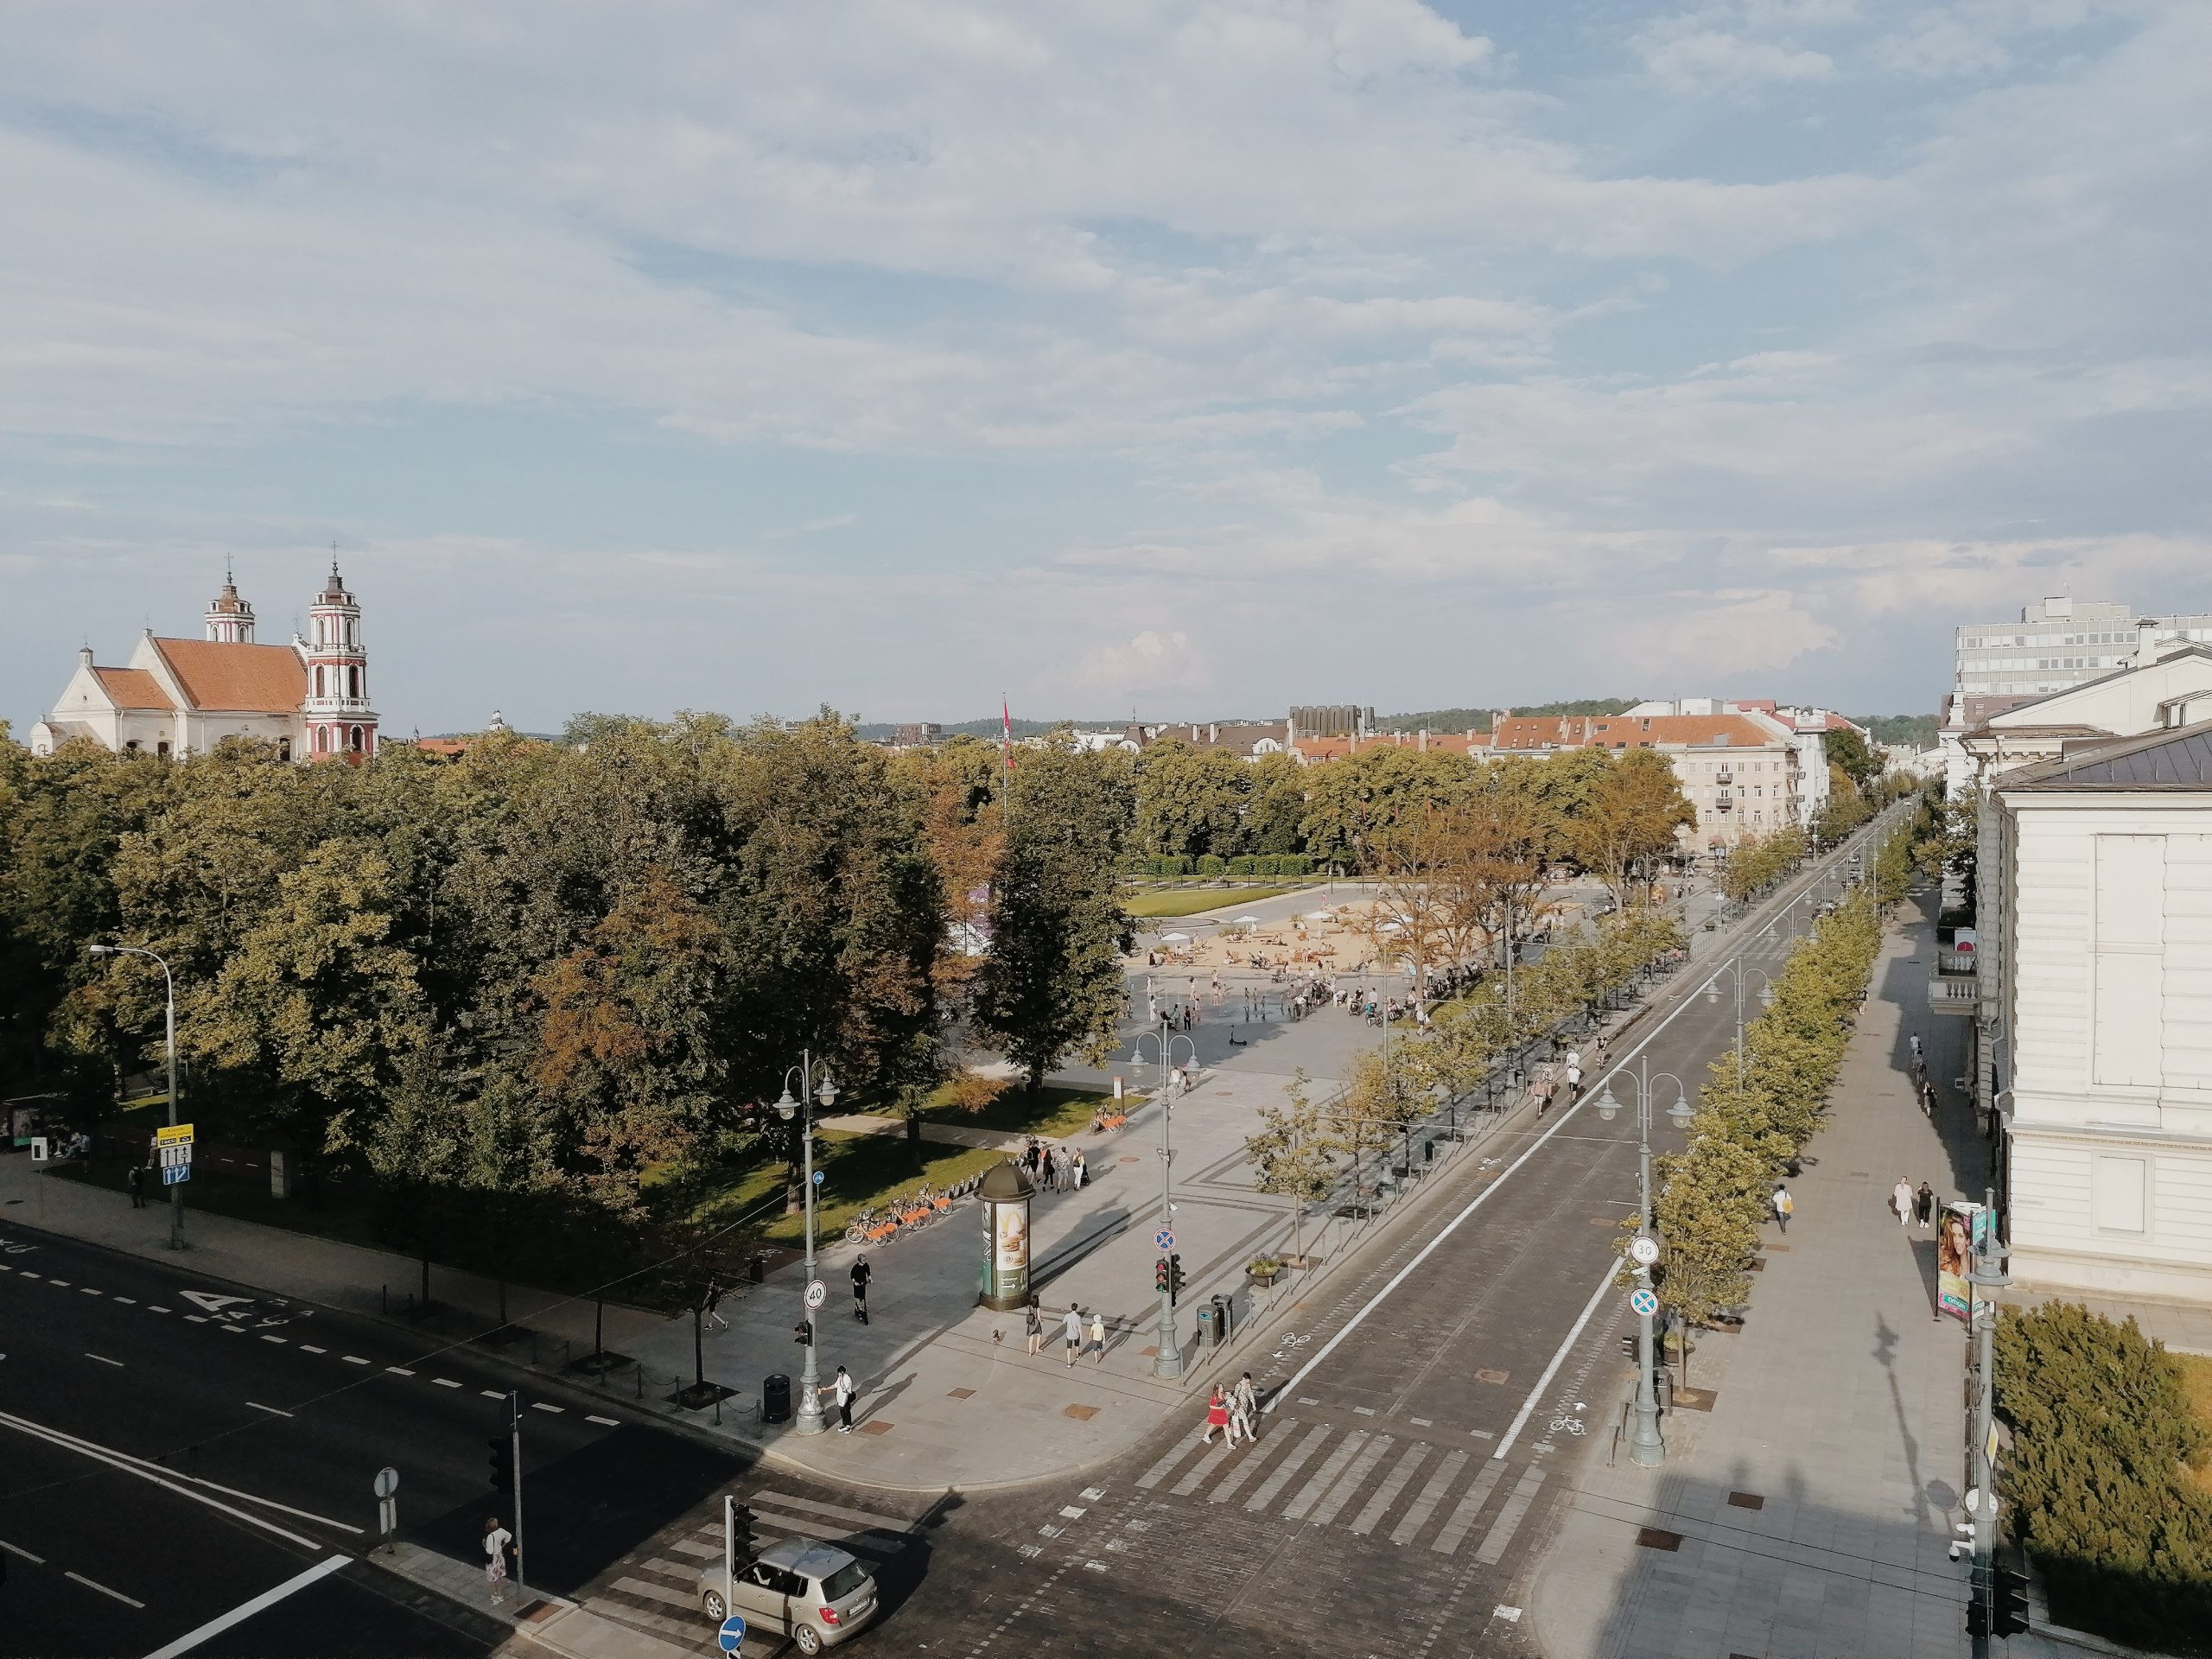 Vilnius overview. lukiskiu square